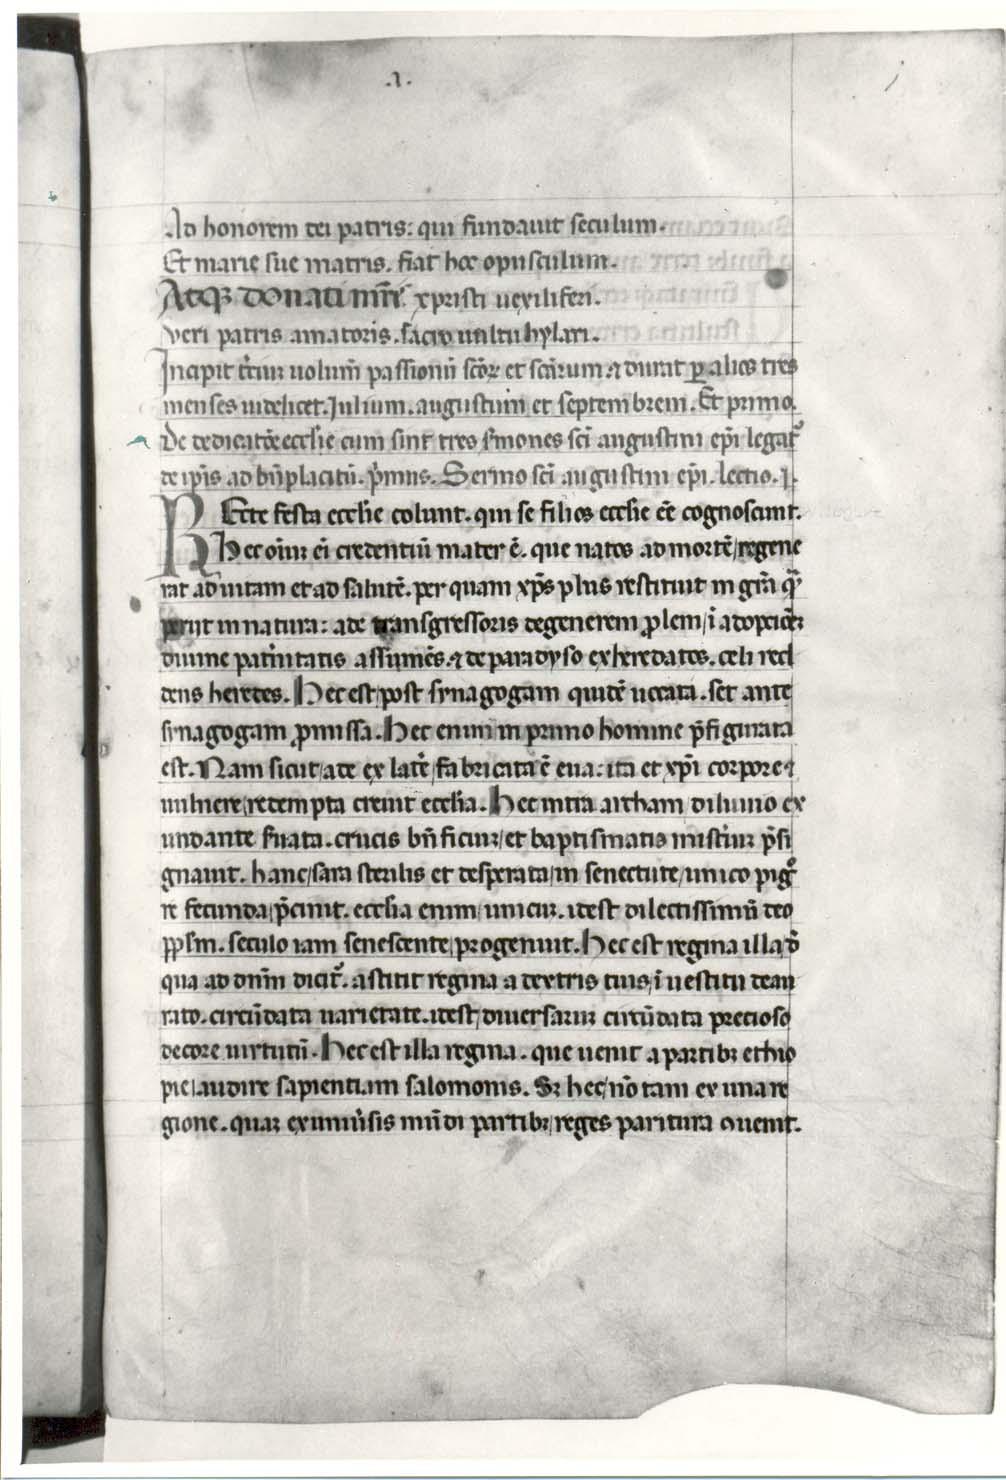 libretto - ambito friulano (sec. XIV)